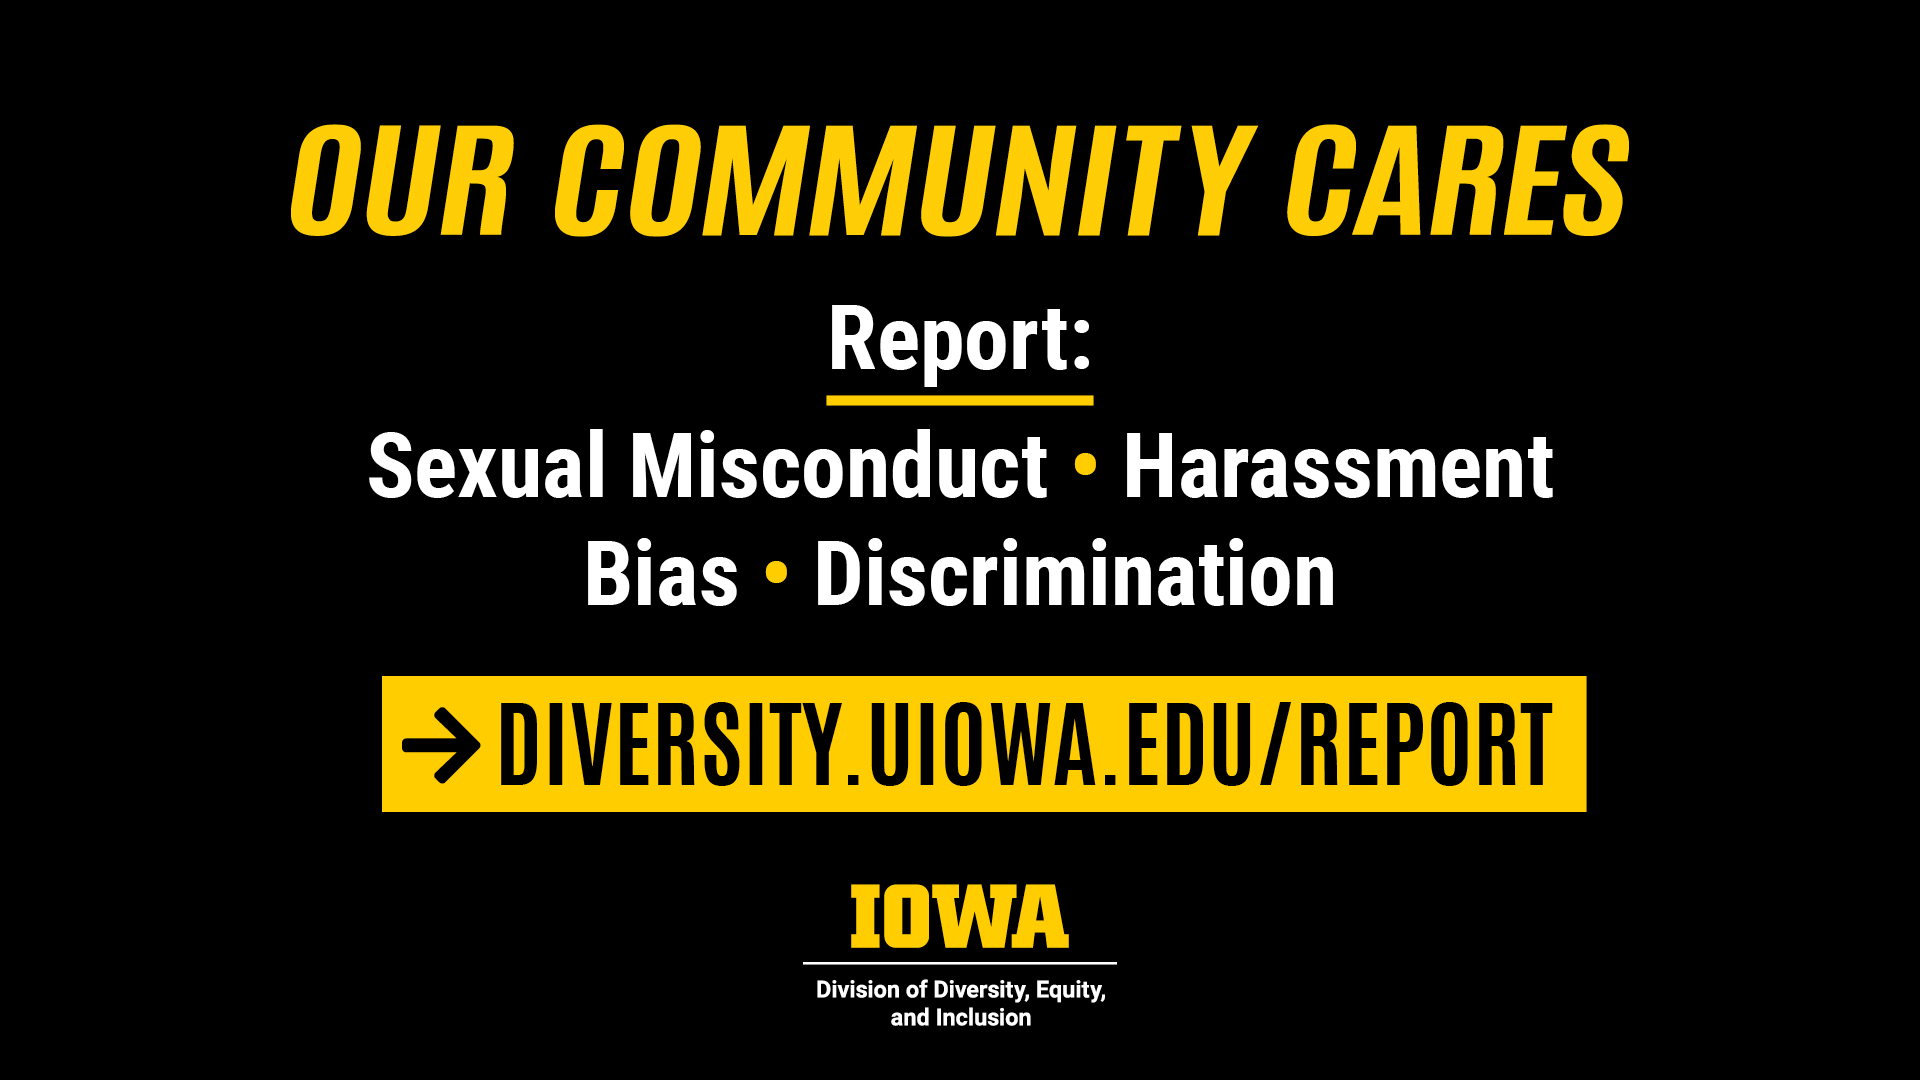 Our Community Cares. Report: Sexual Misconduct | Harassment | Bias | Discrimination DIVERSITY.UIOWA.EDU/REPORT